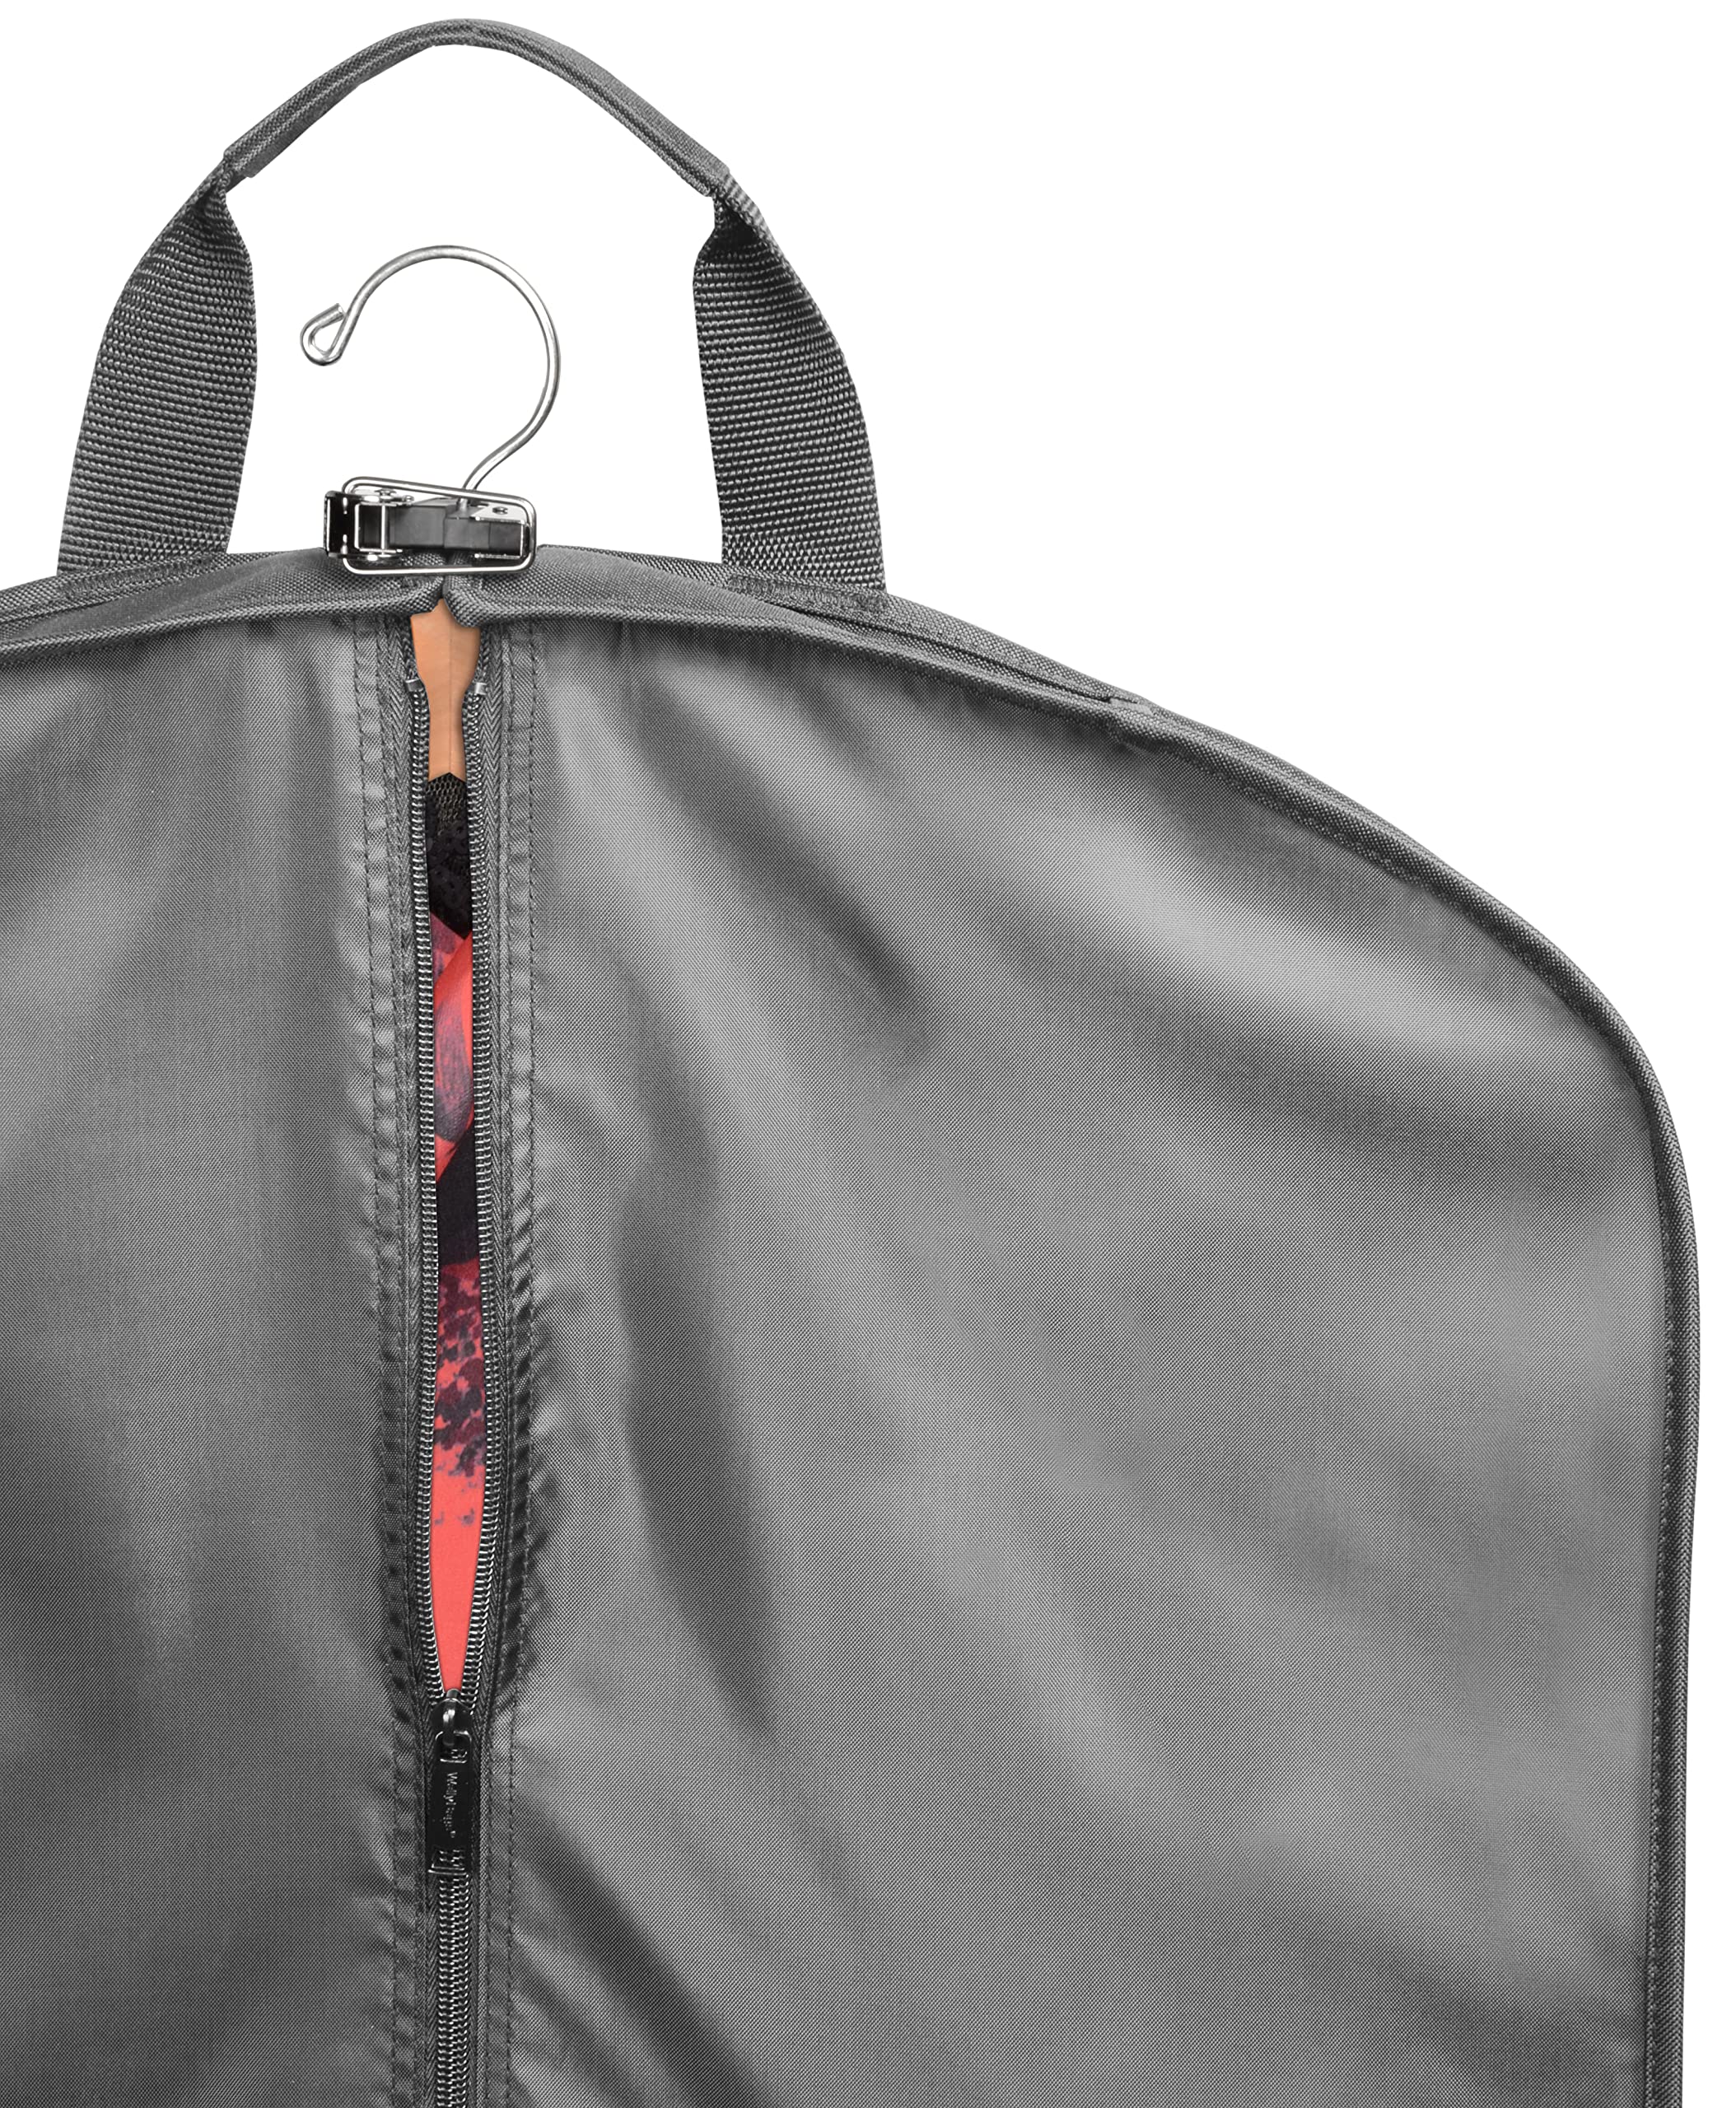 WallyBags 60 Travel Garment Bag - Black